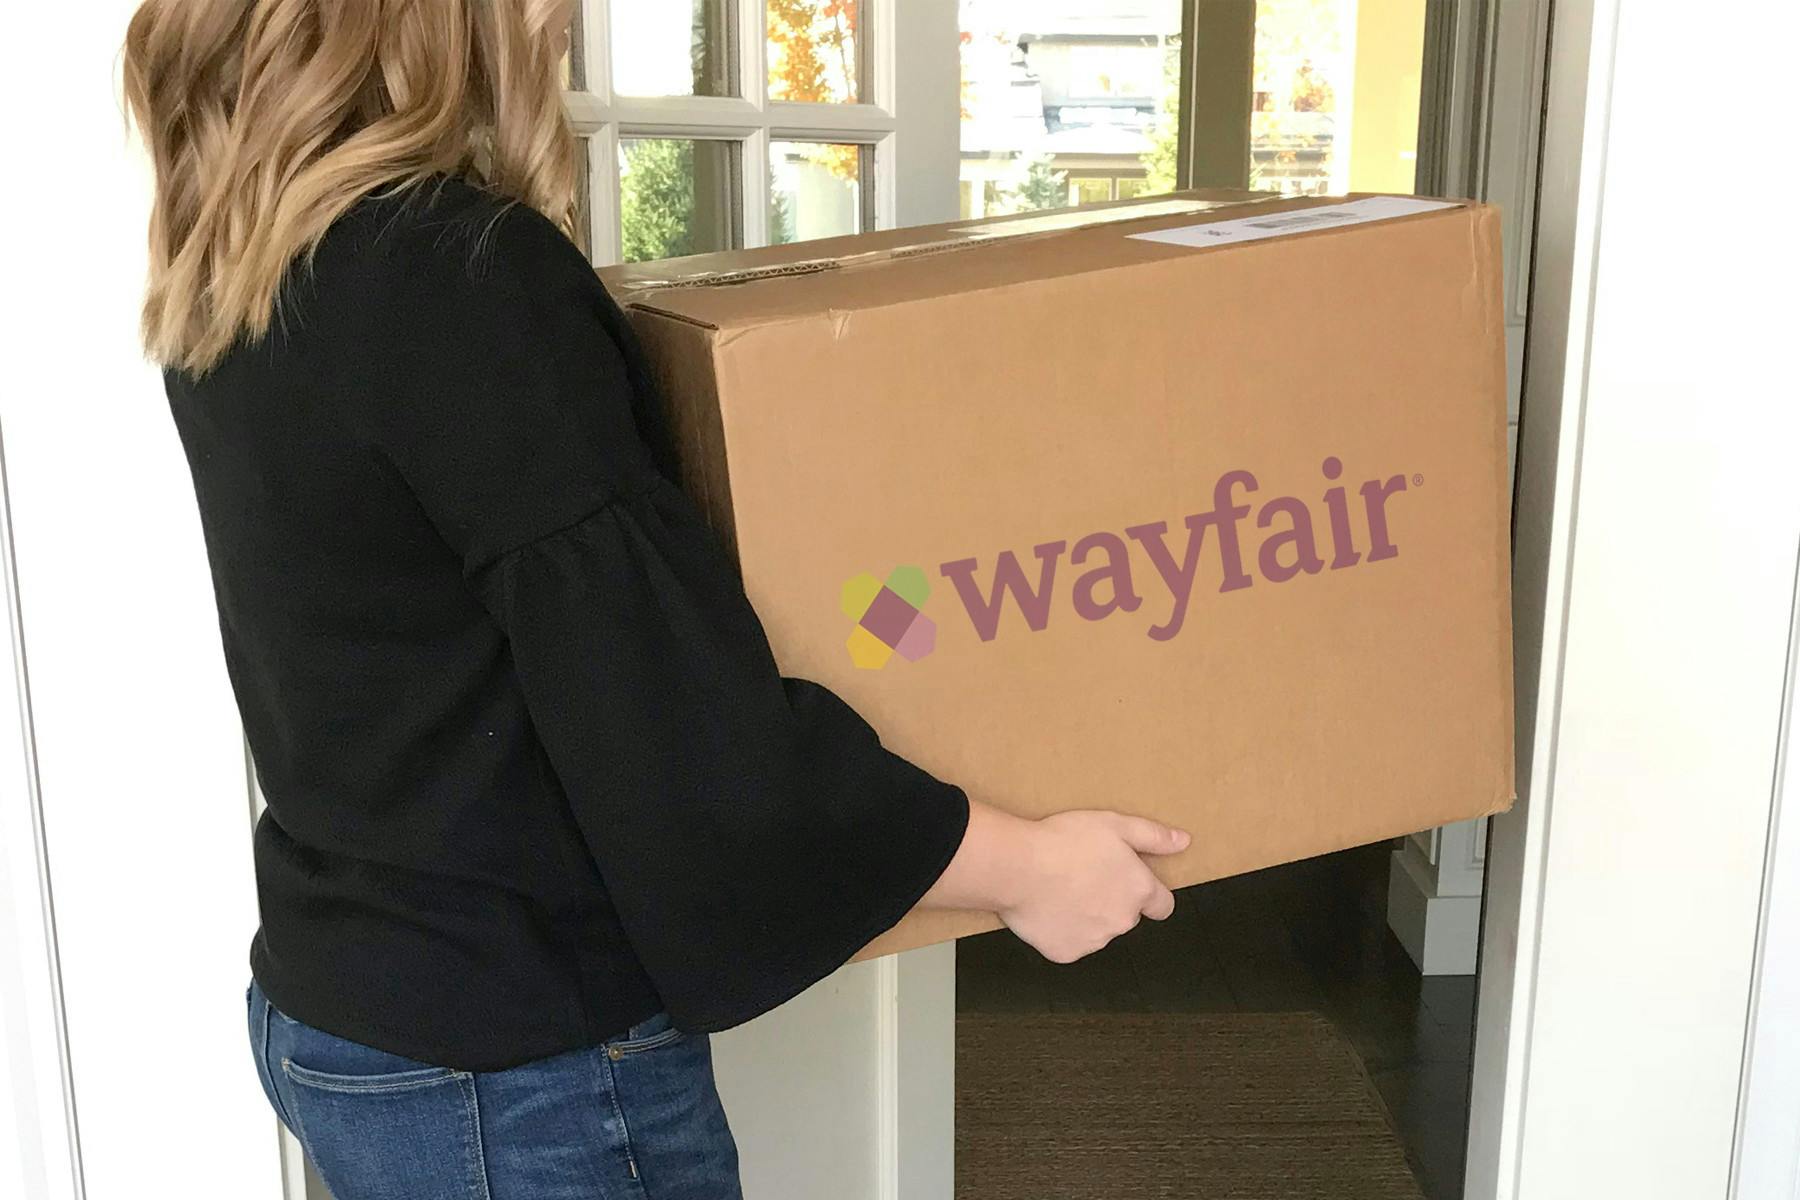 Wayfair: Open Box: their return, your reward 🙂